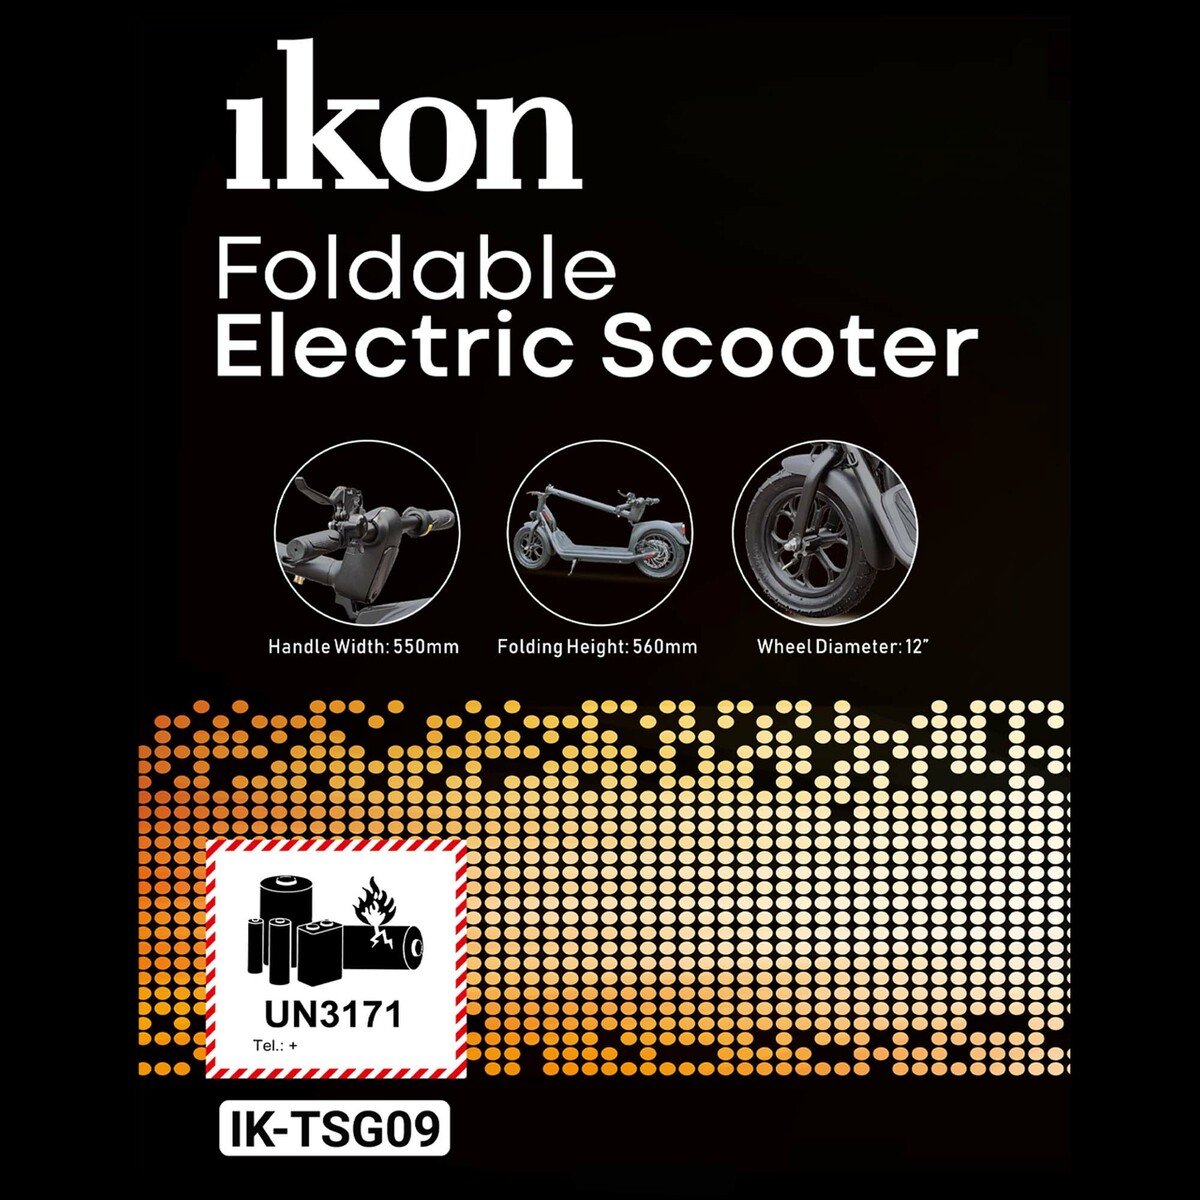 Ikon Foldable Electric Scooter IKTSG09